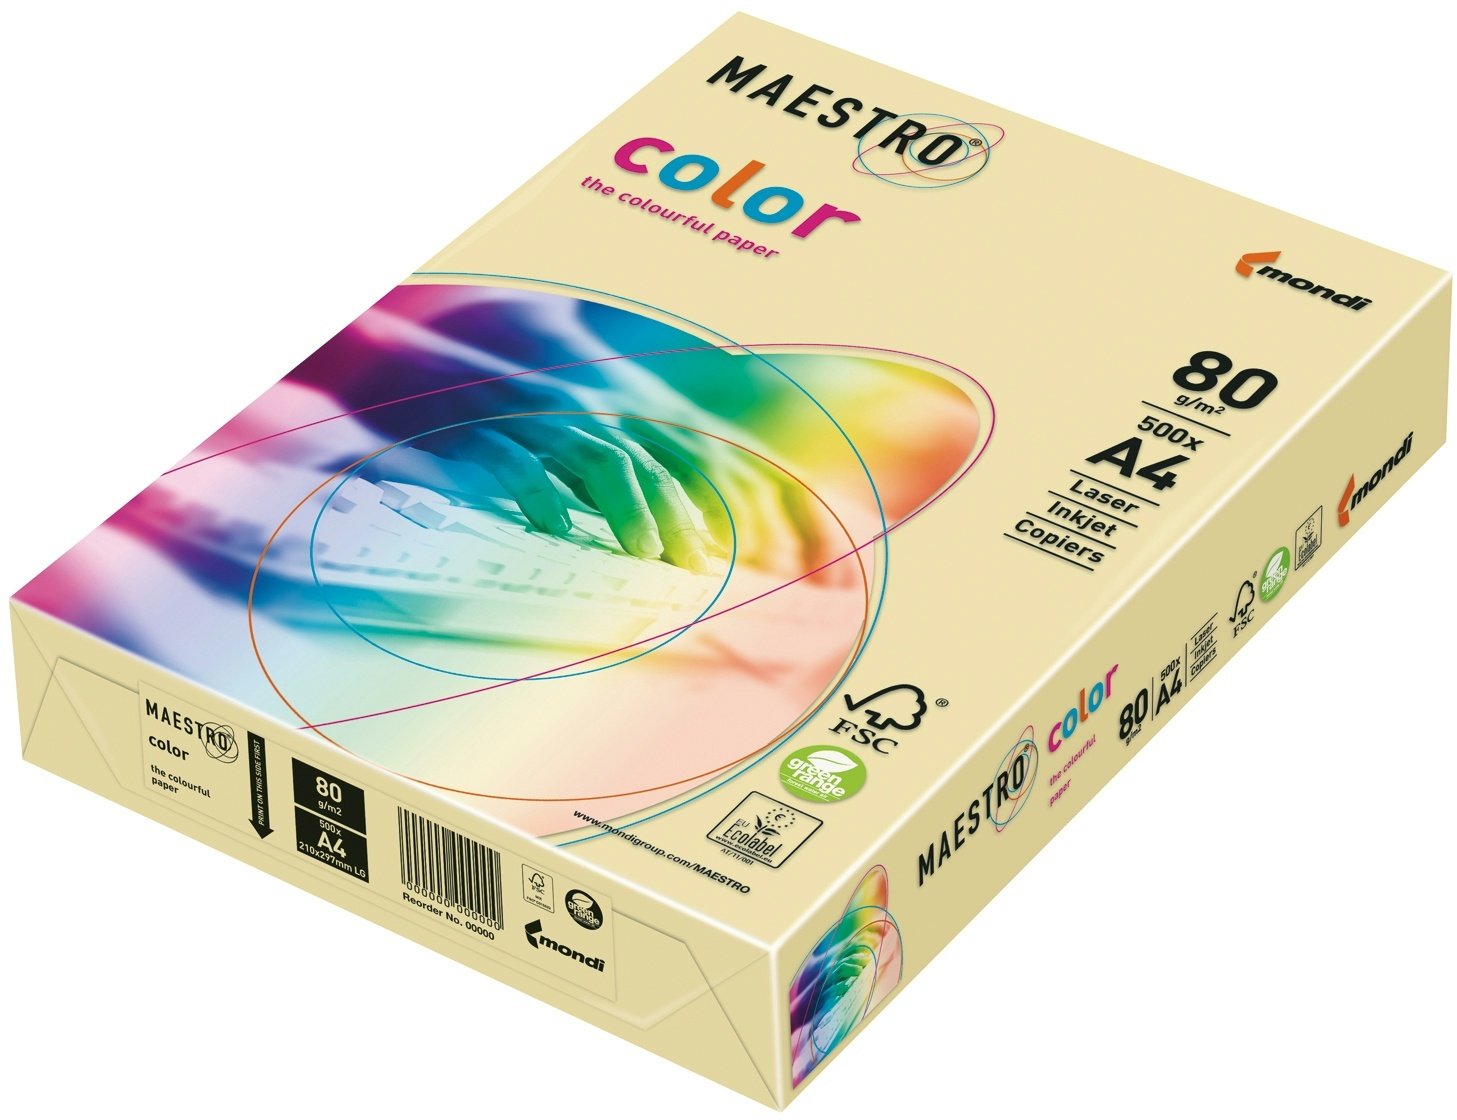 MAESTRO Kopierpapier color A3 9417-IG50B80B intensivgelb 500Bl.